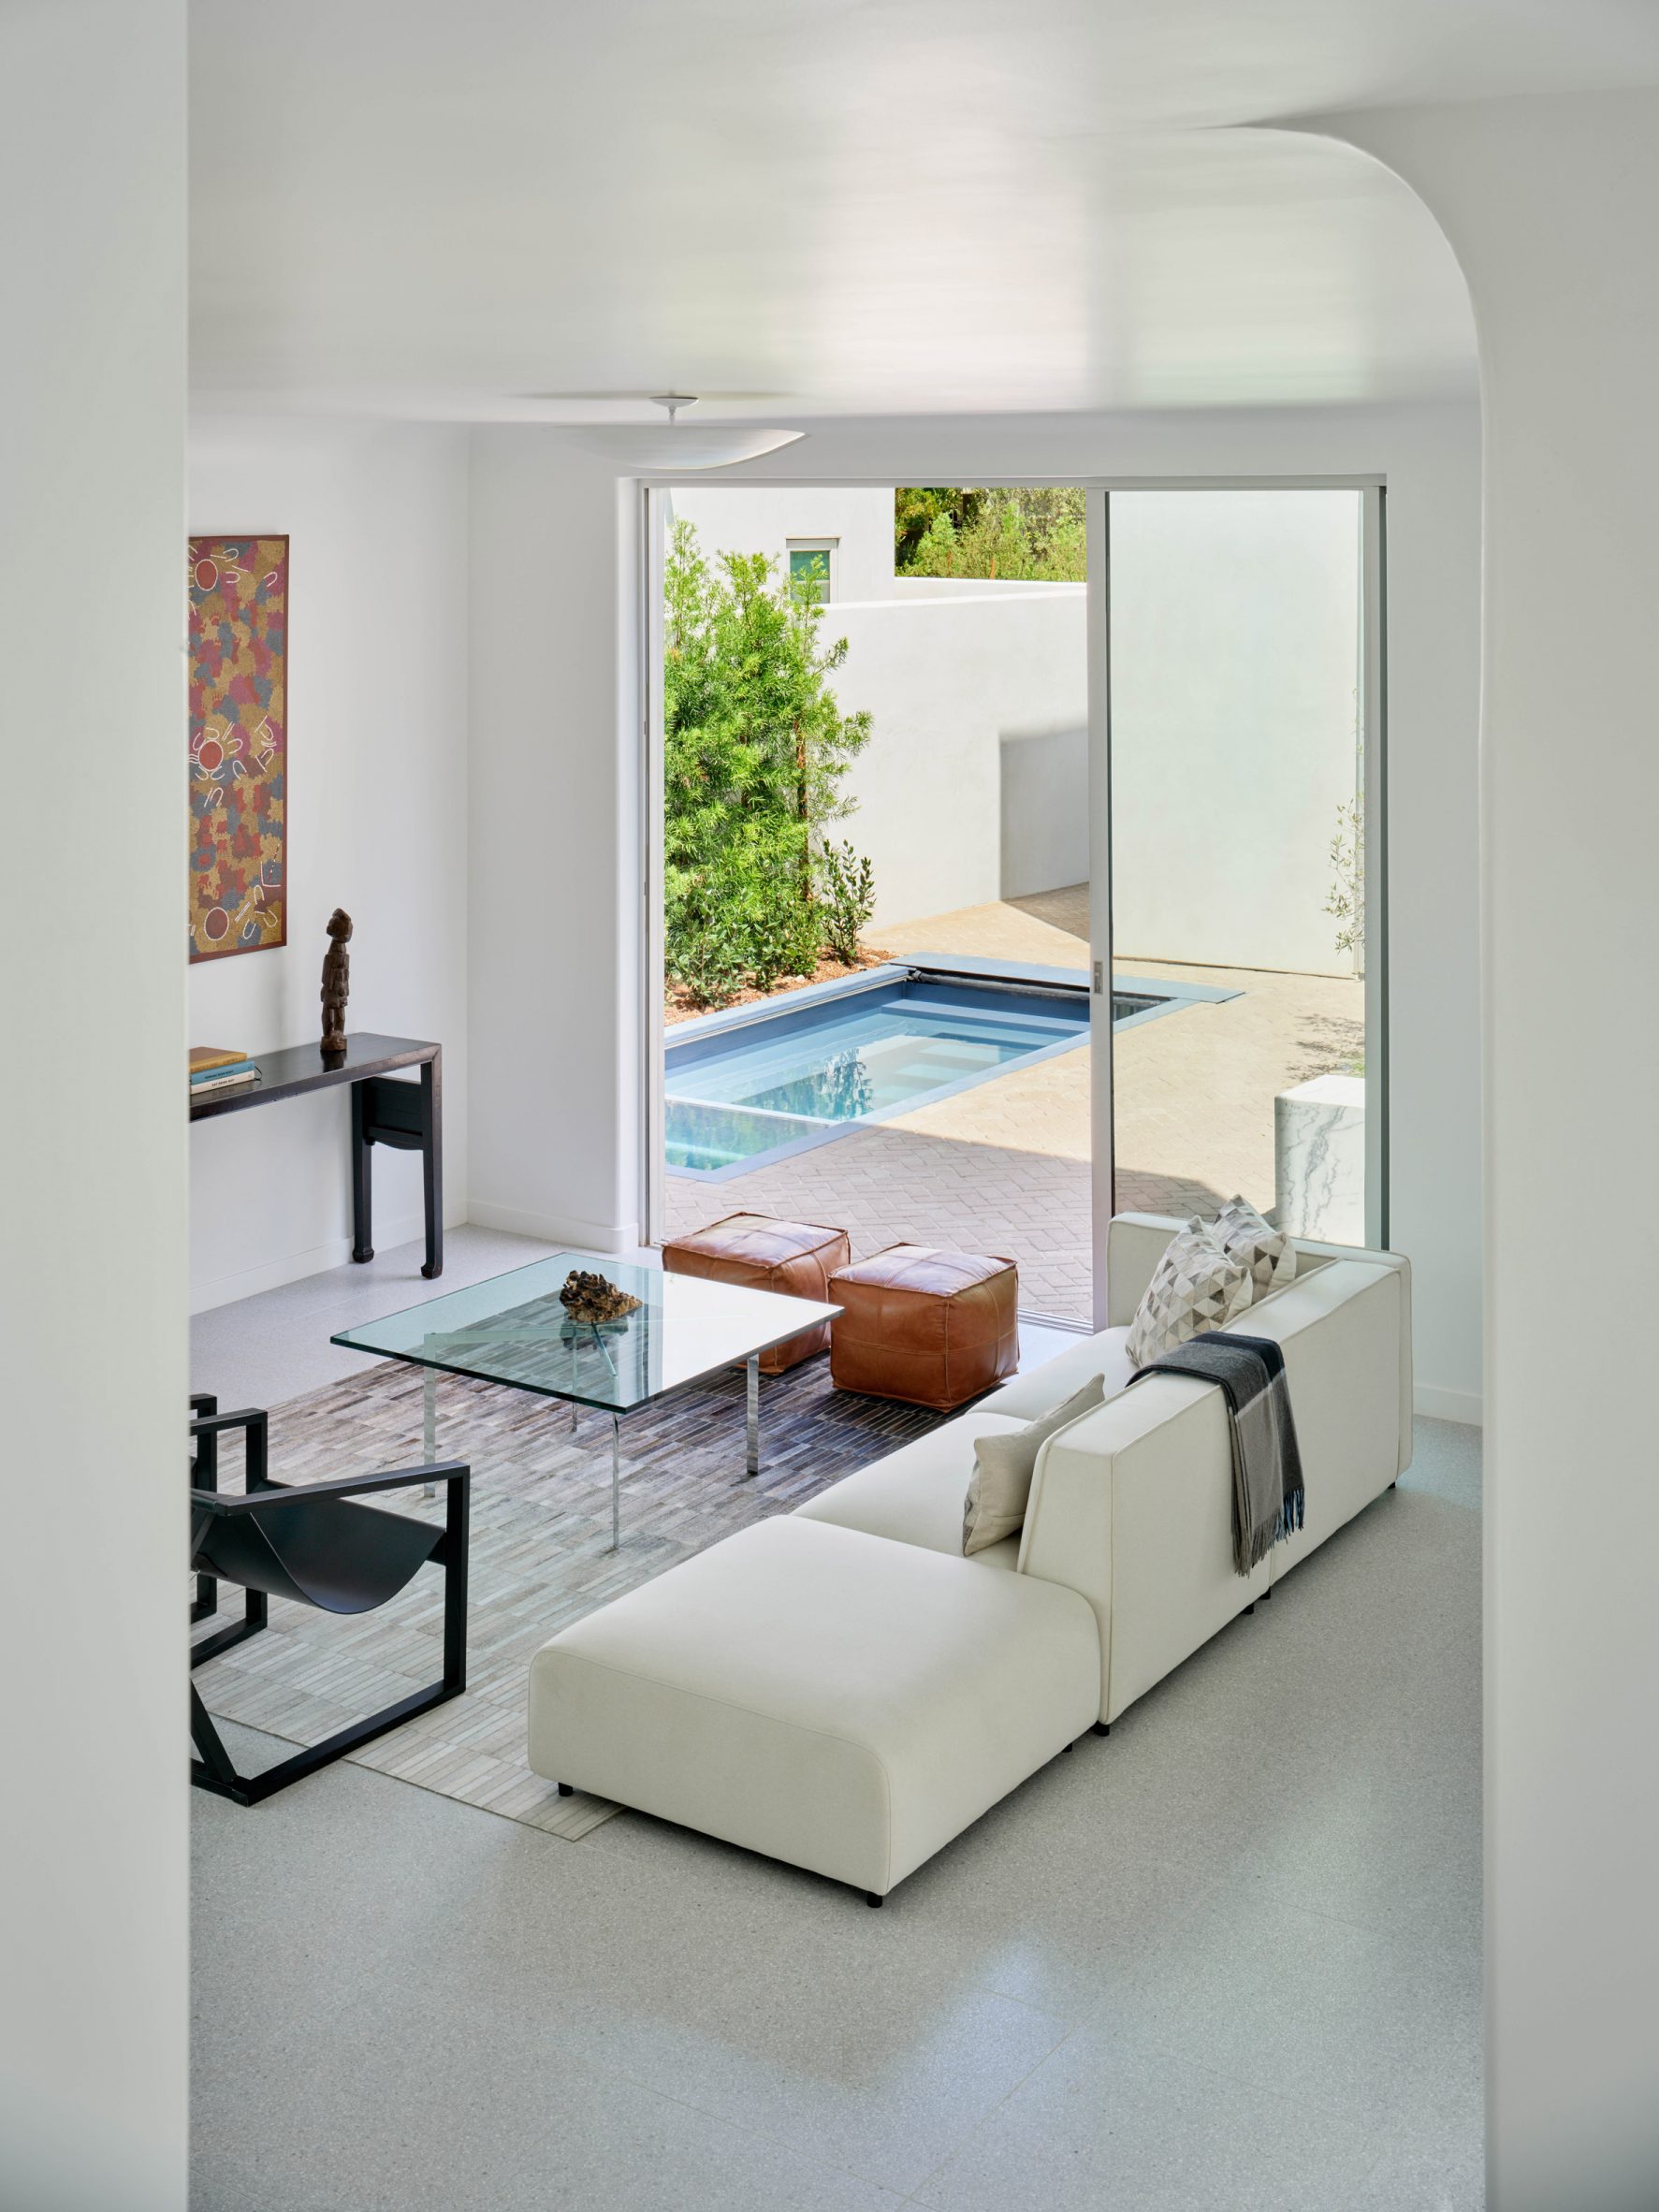 Living room with pool seen through courtyard doors